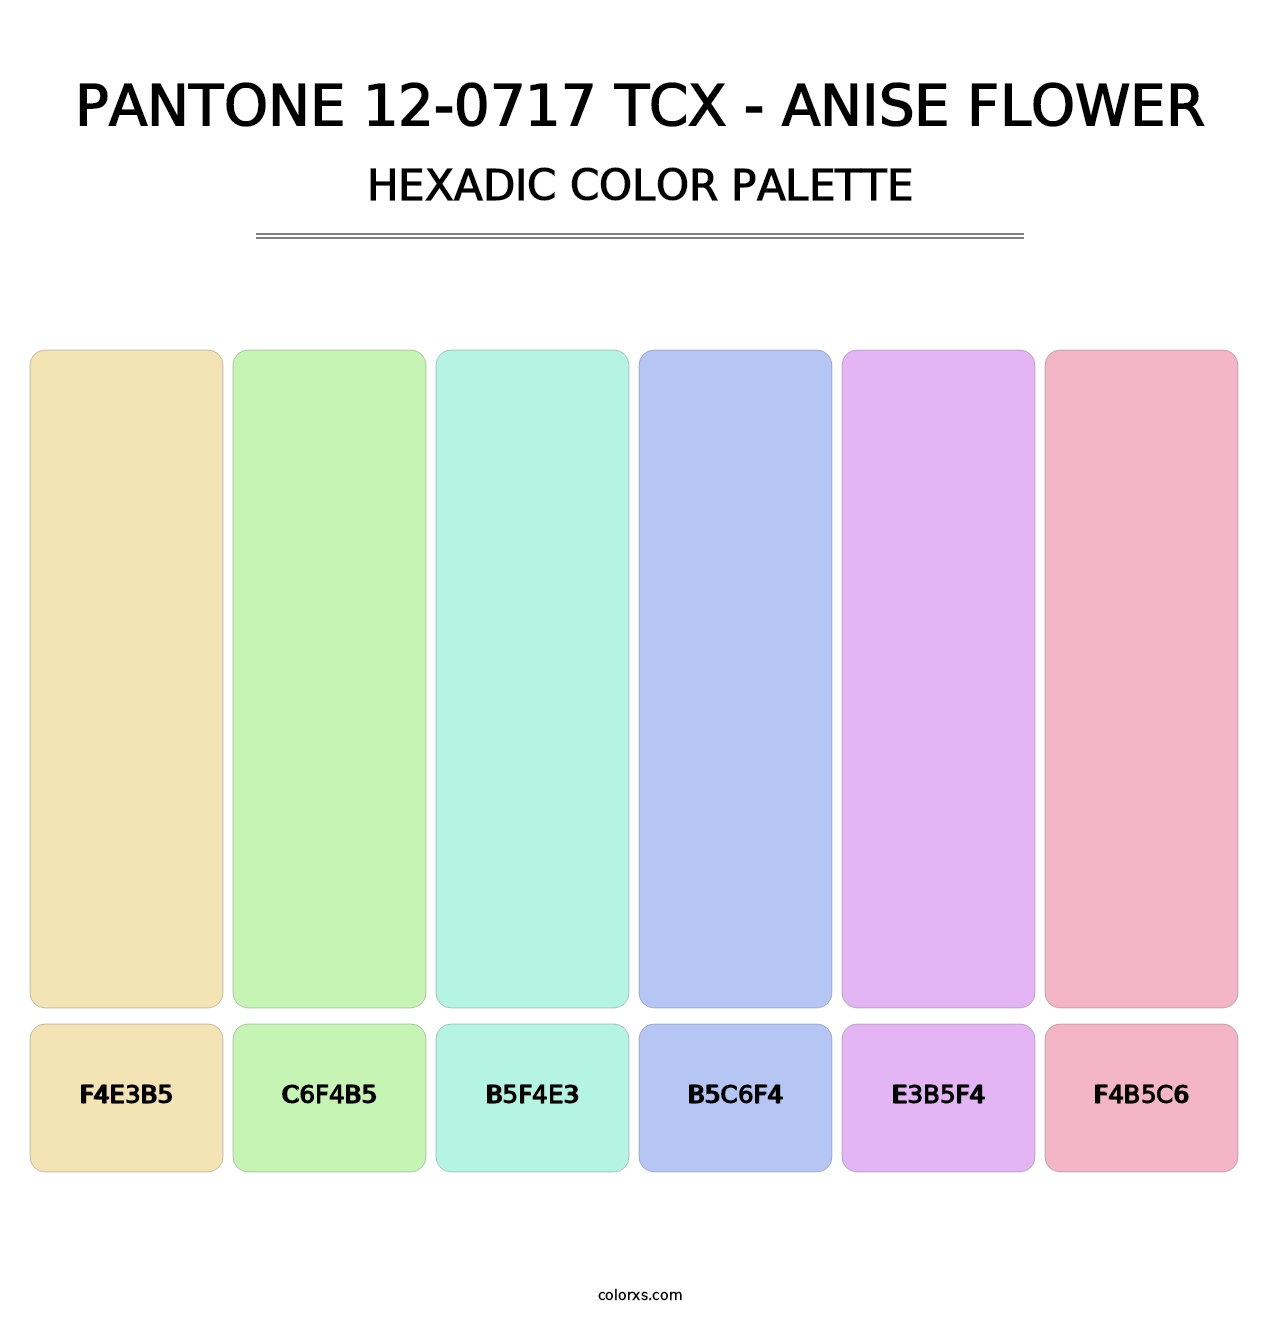 PANTONE 12-0717 TCX - Anise Flower - Hexadic Color Palette